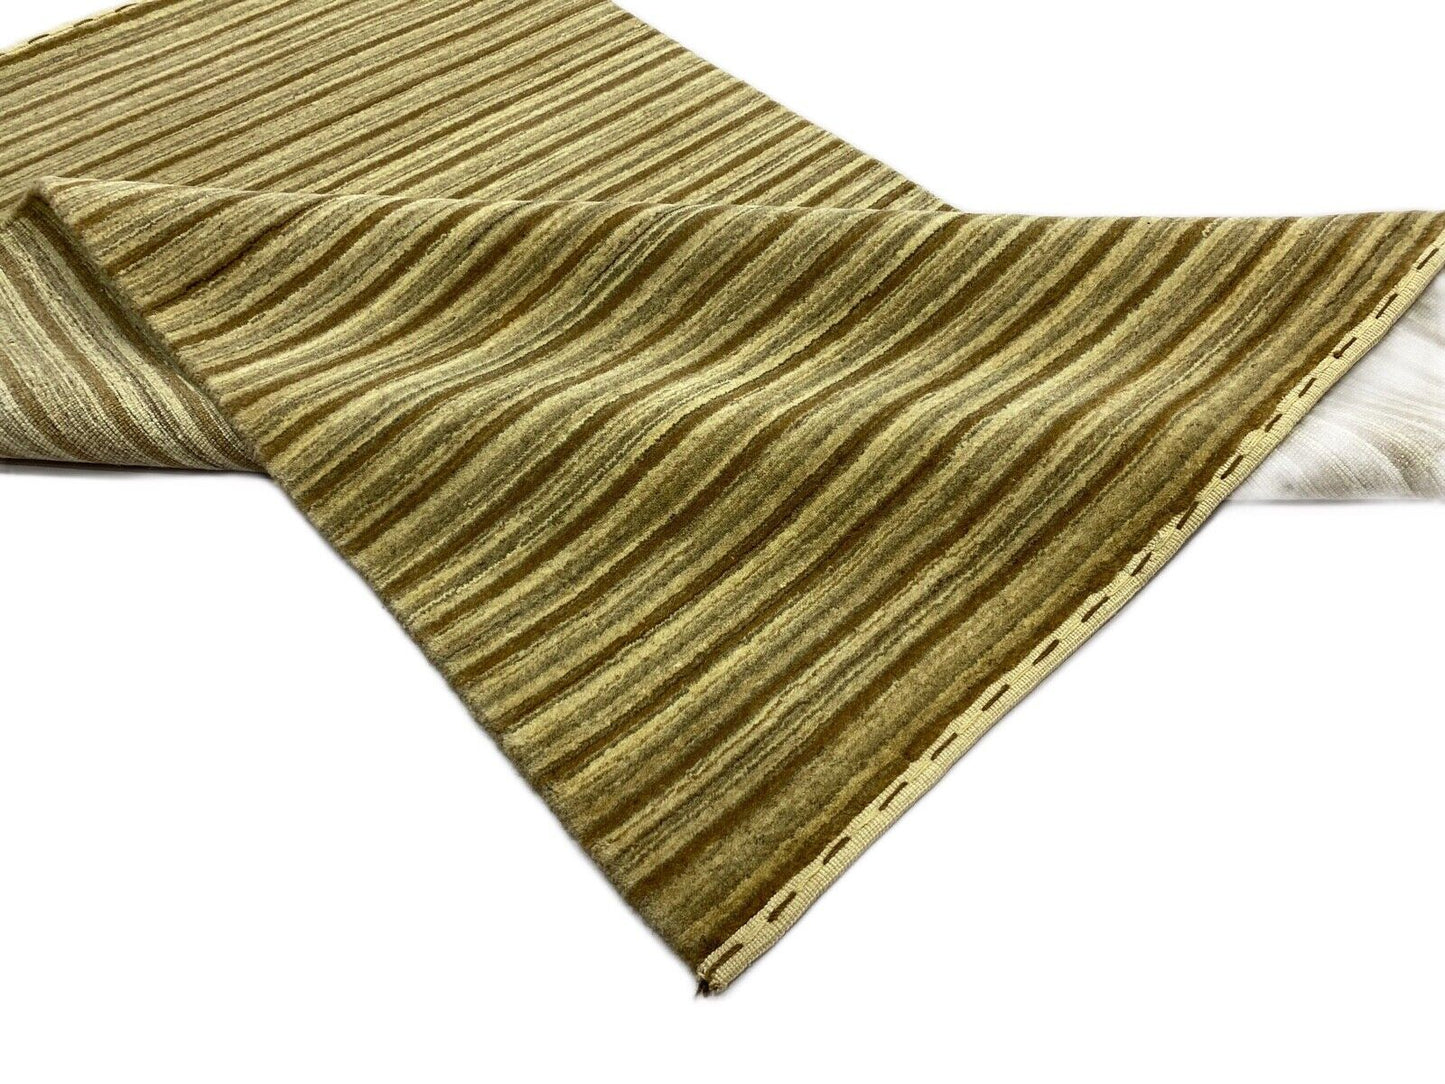 100% Wolle Teppich Beige Braun Grau Gabbeh lori Handgewebt 120x180 cm S72